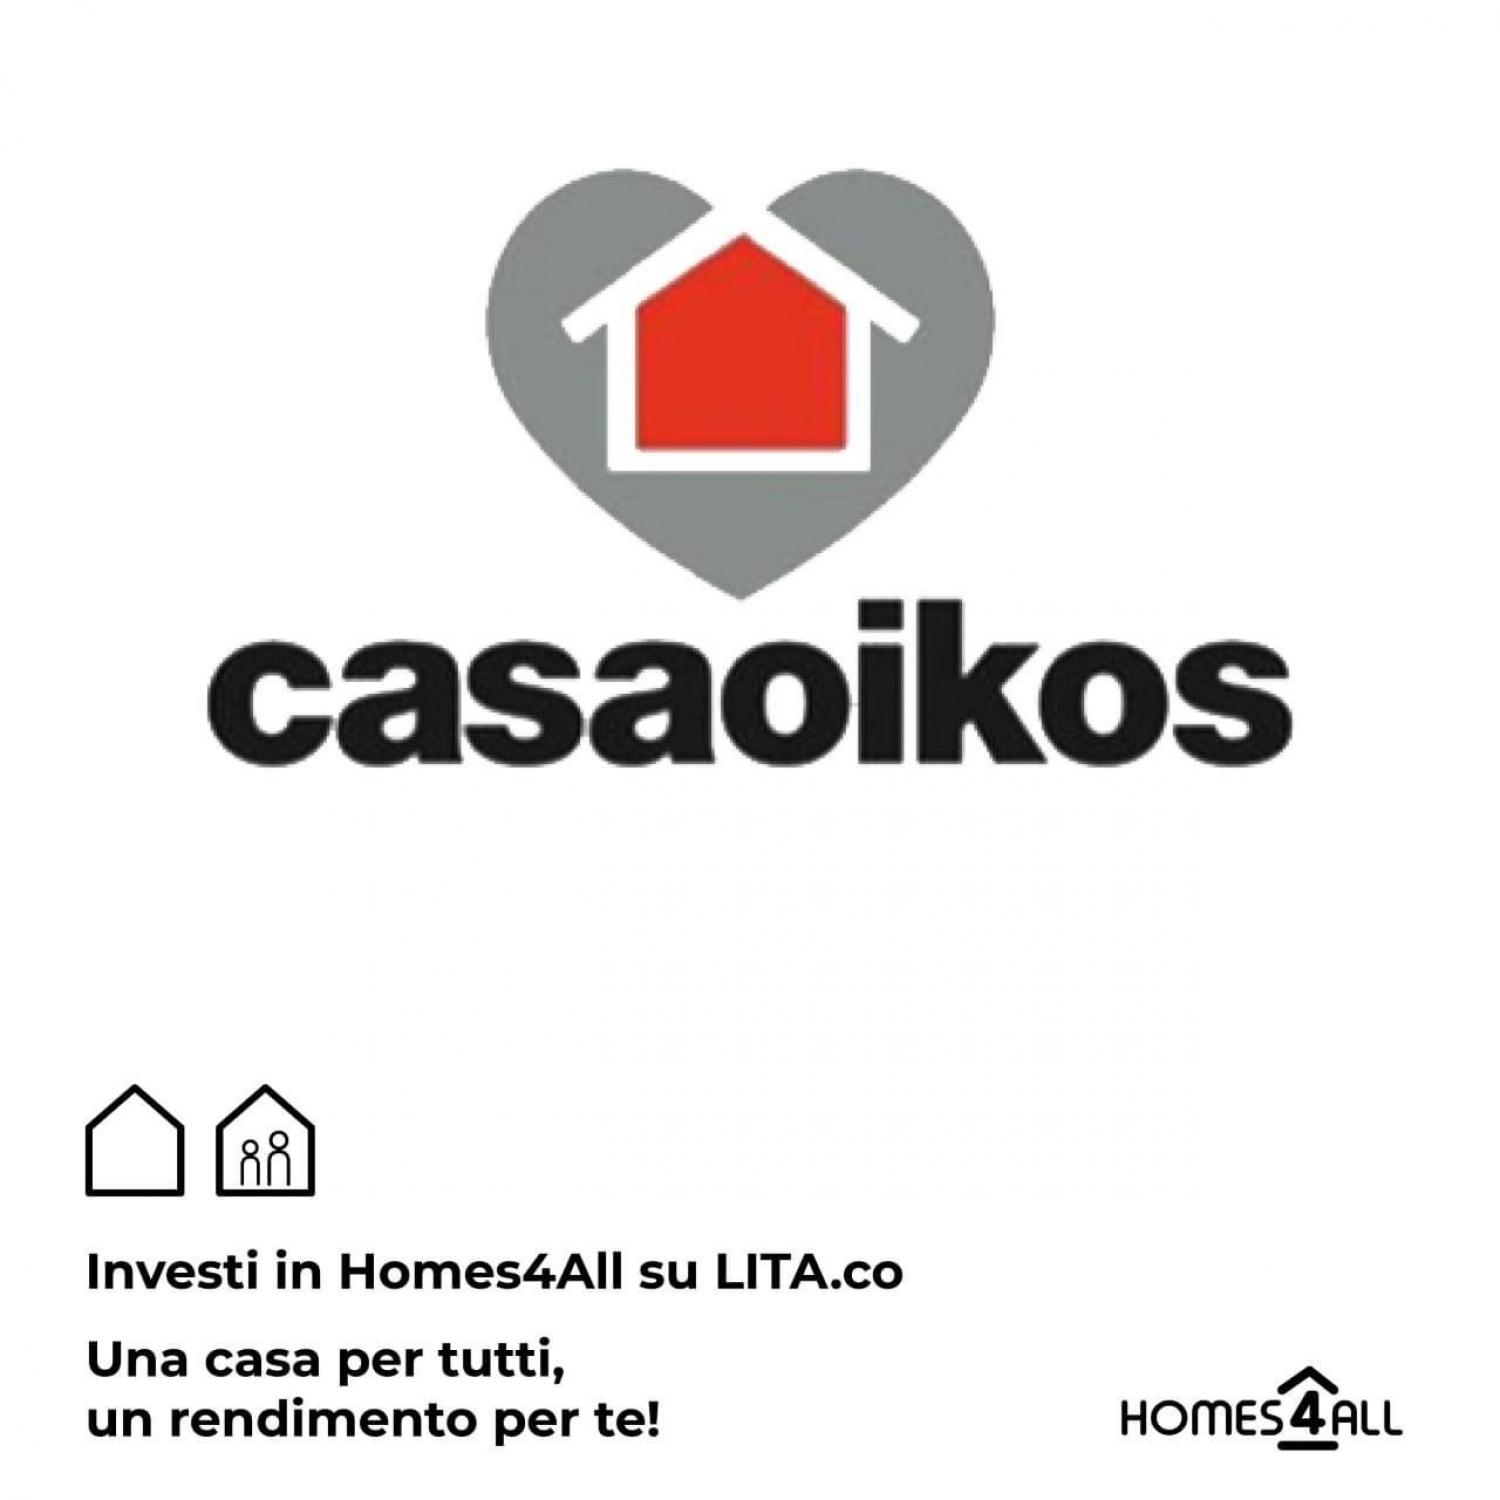 Casaoikos ed Homes4All